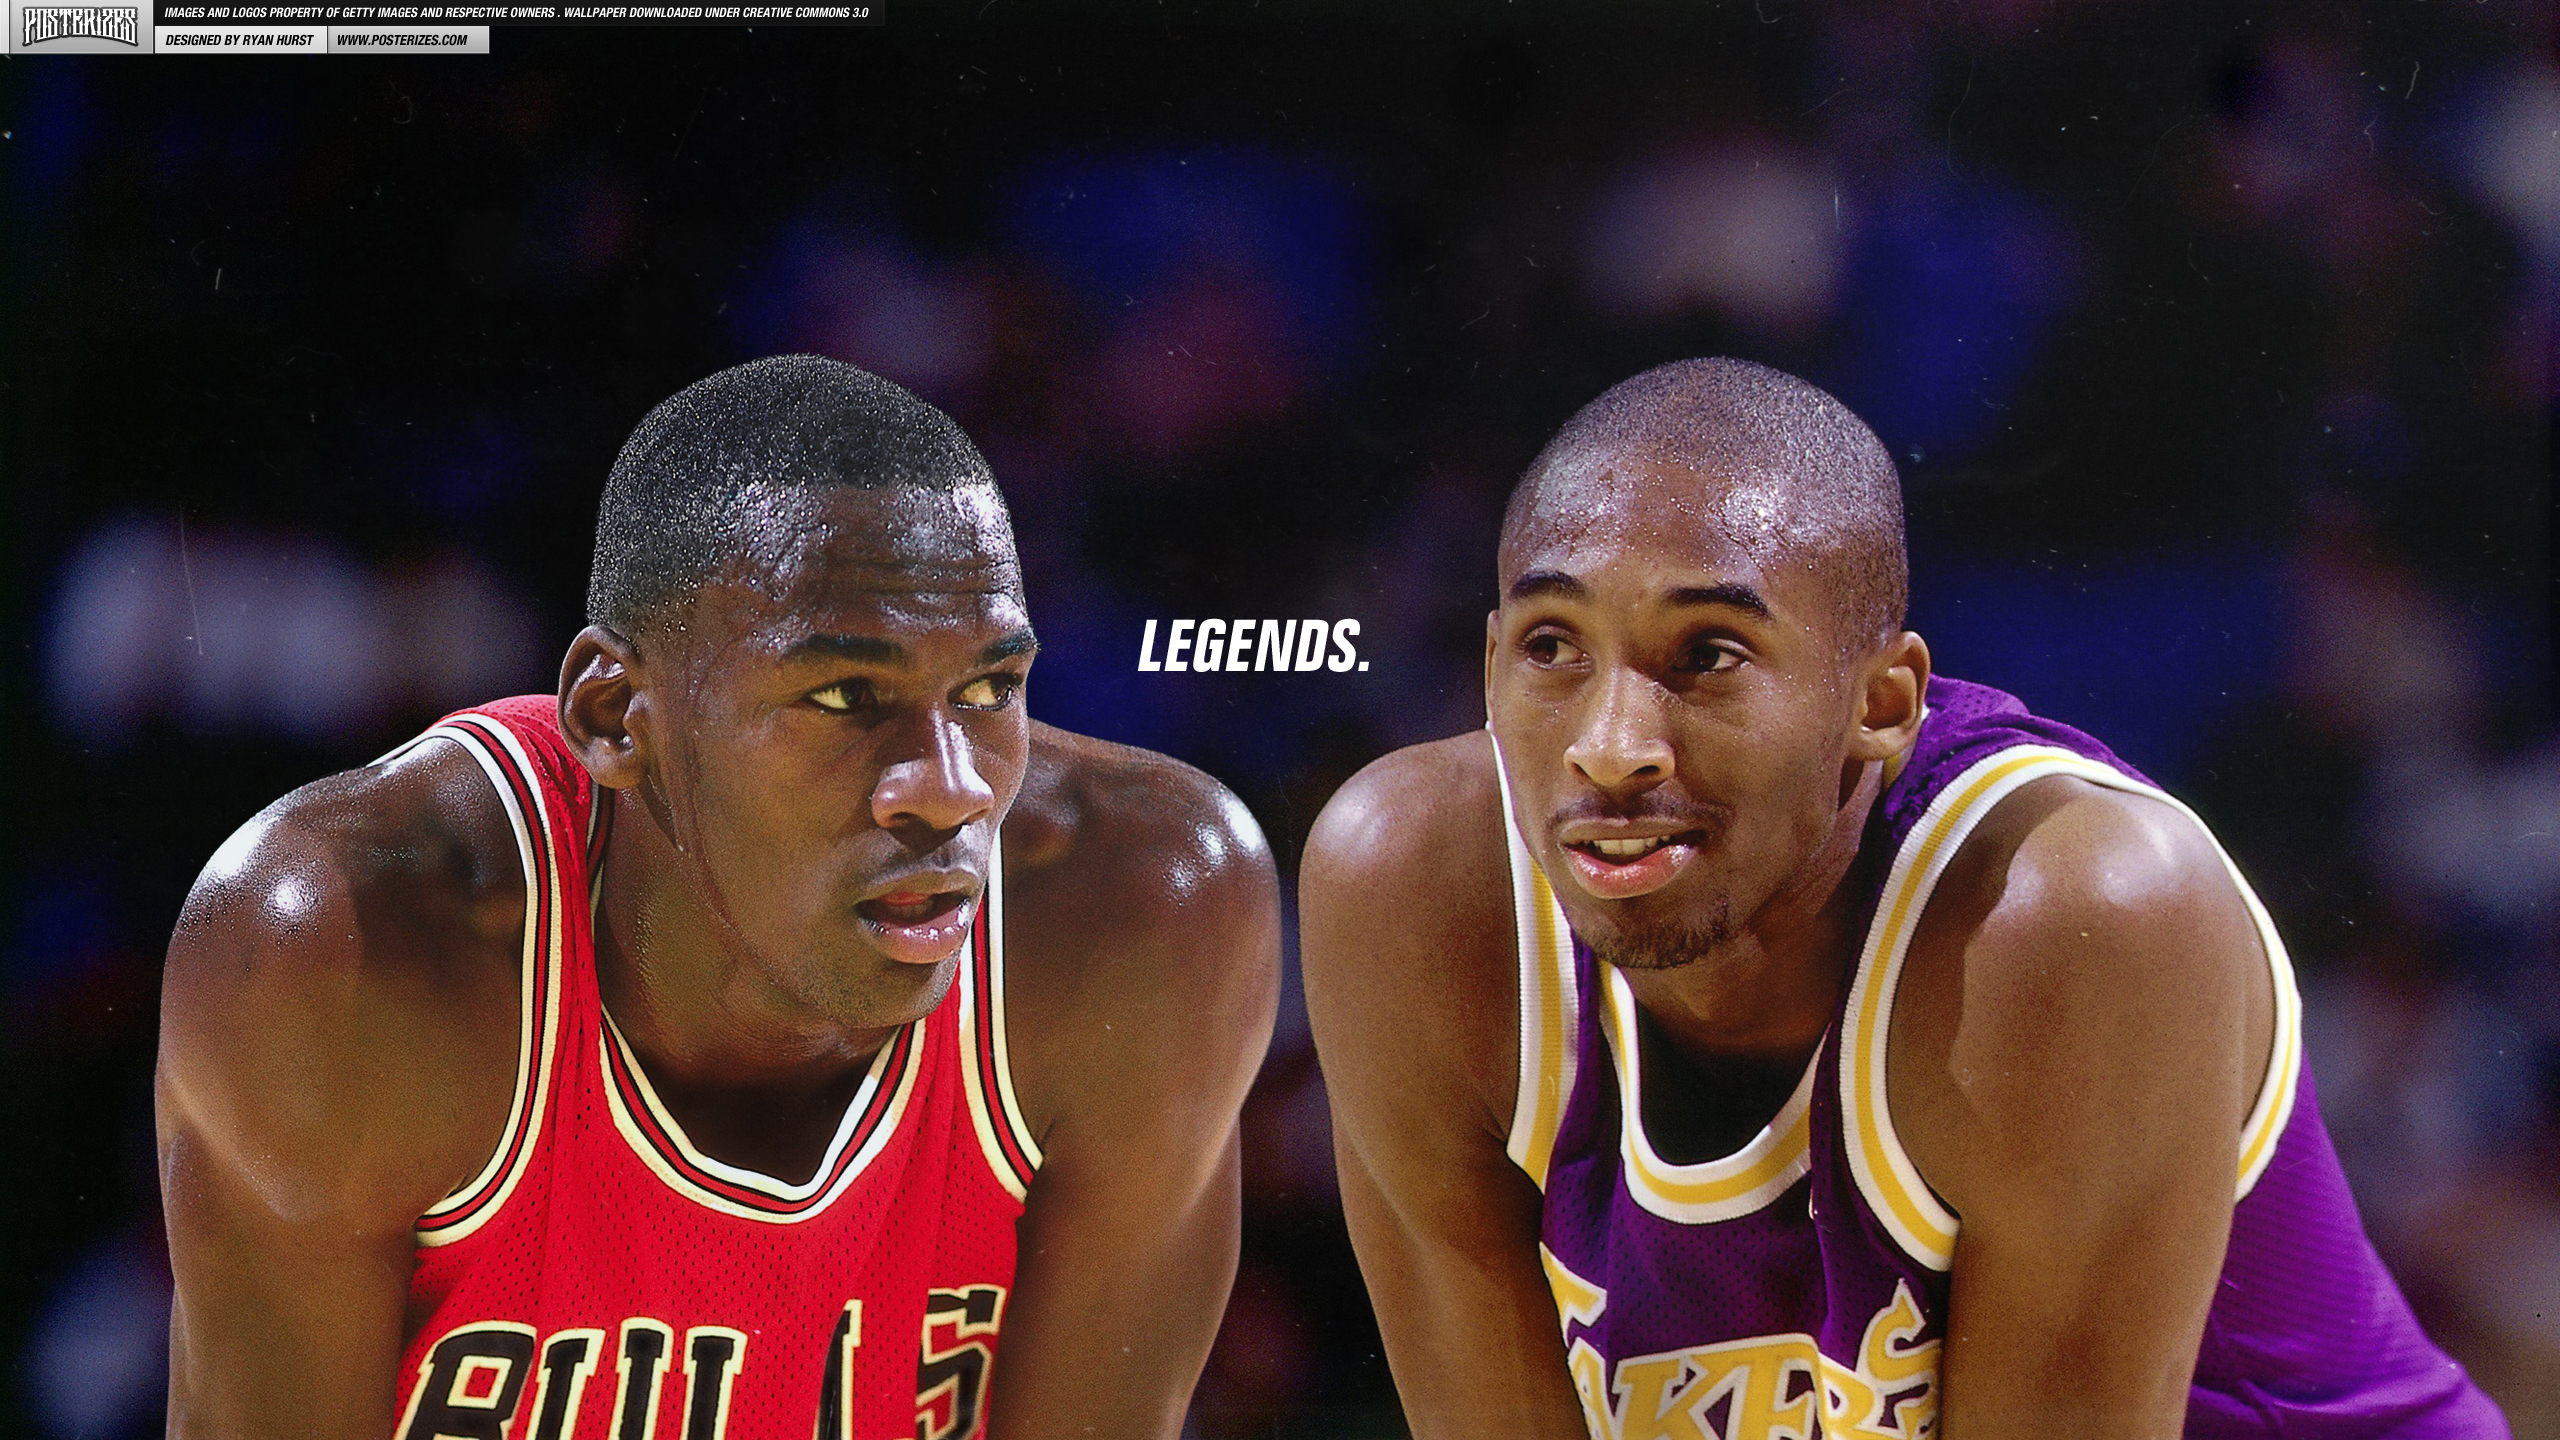 Kobe Bryant Michael Jordan Legends Wallpaper Posterizes